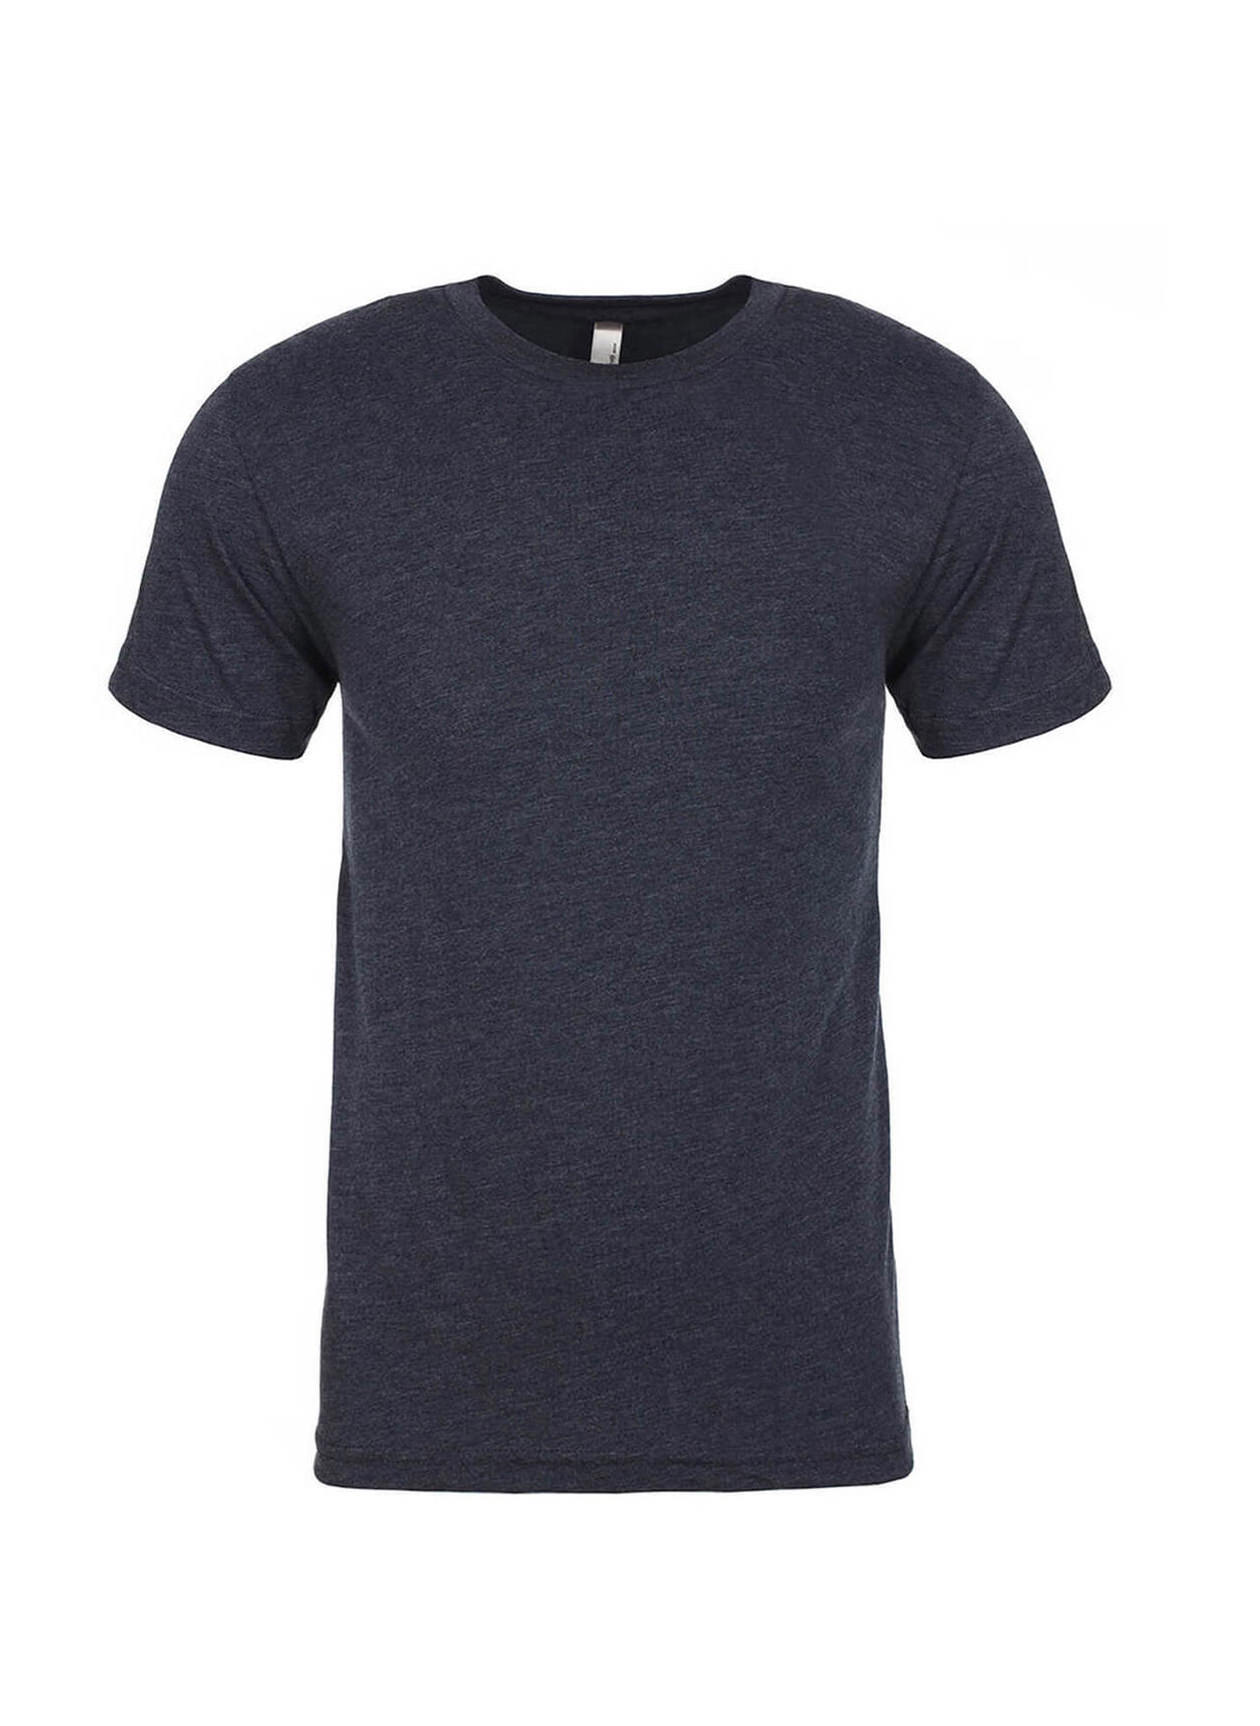 Next Level Men's Vintage Navy Unisex Triblend T-Shirt